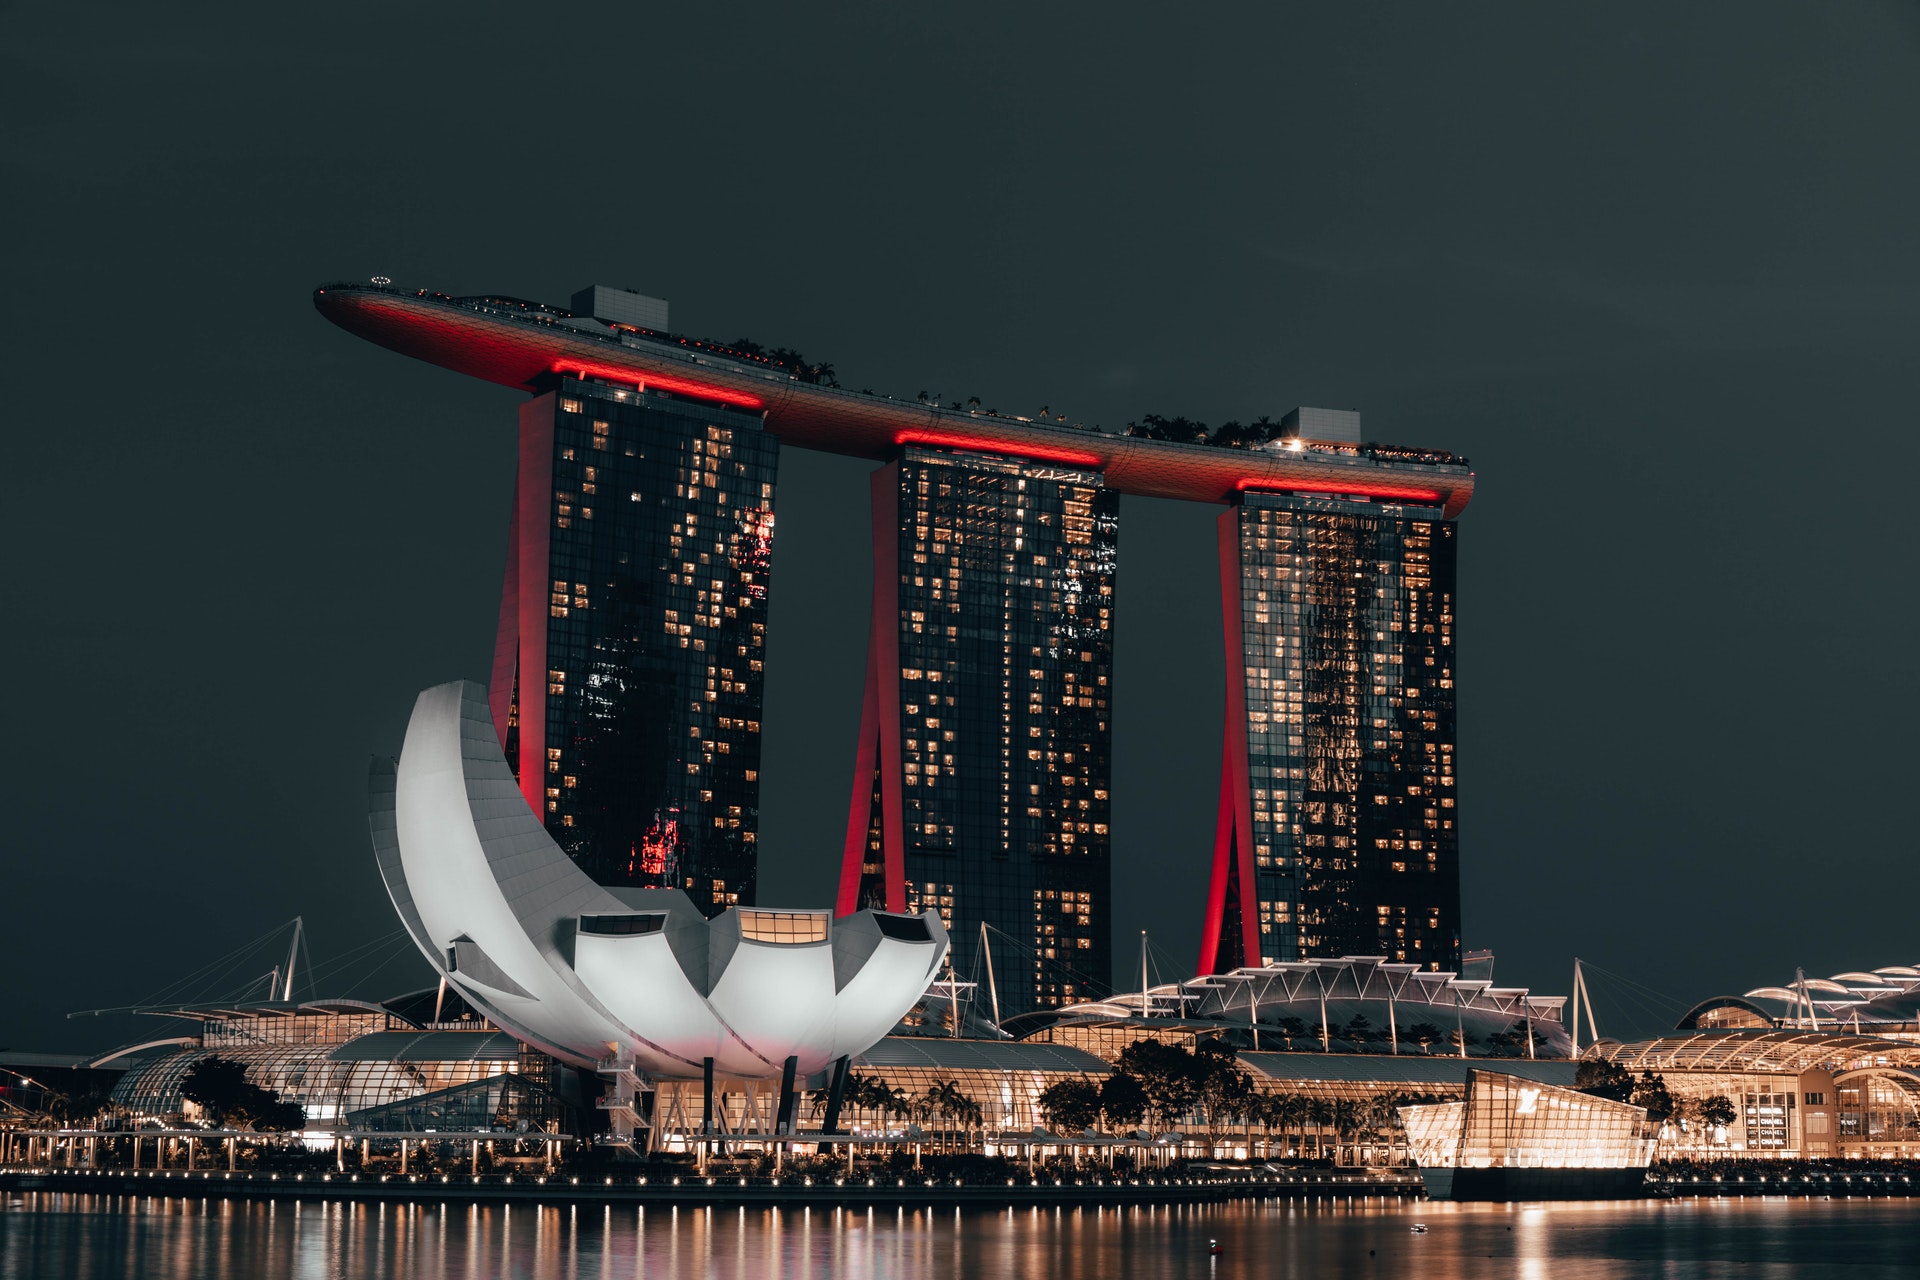 Singapore Capital